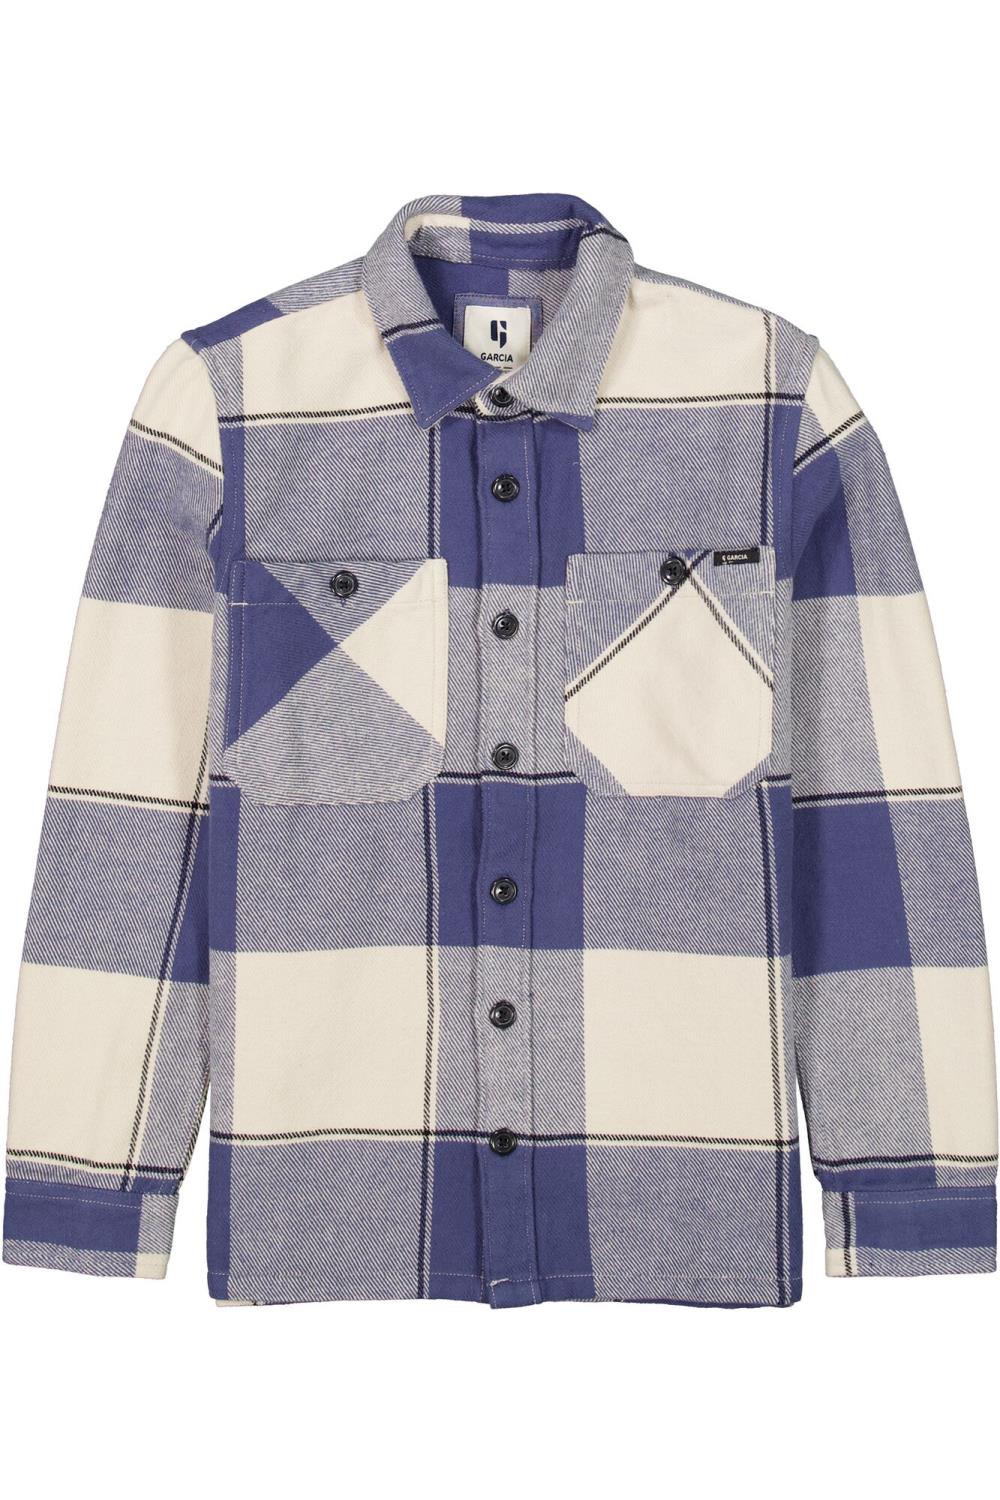 Garcia Flanellskjorte med rutemønster - Blue Depth